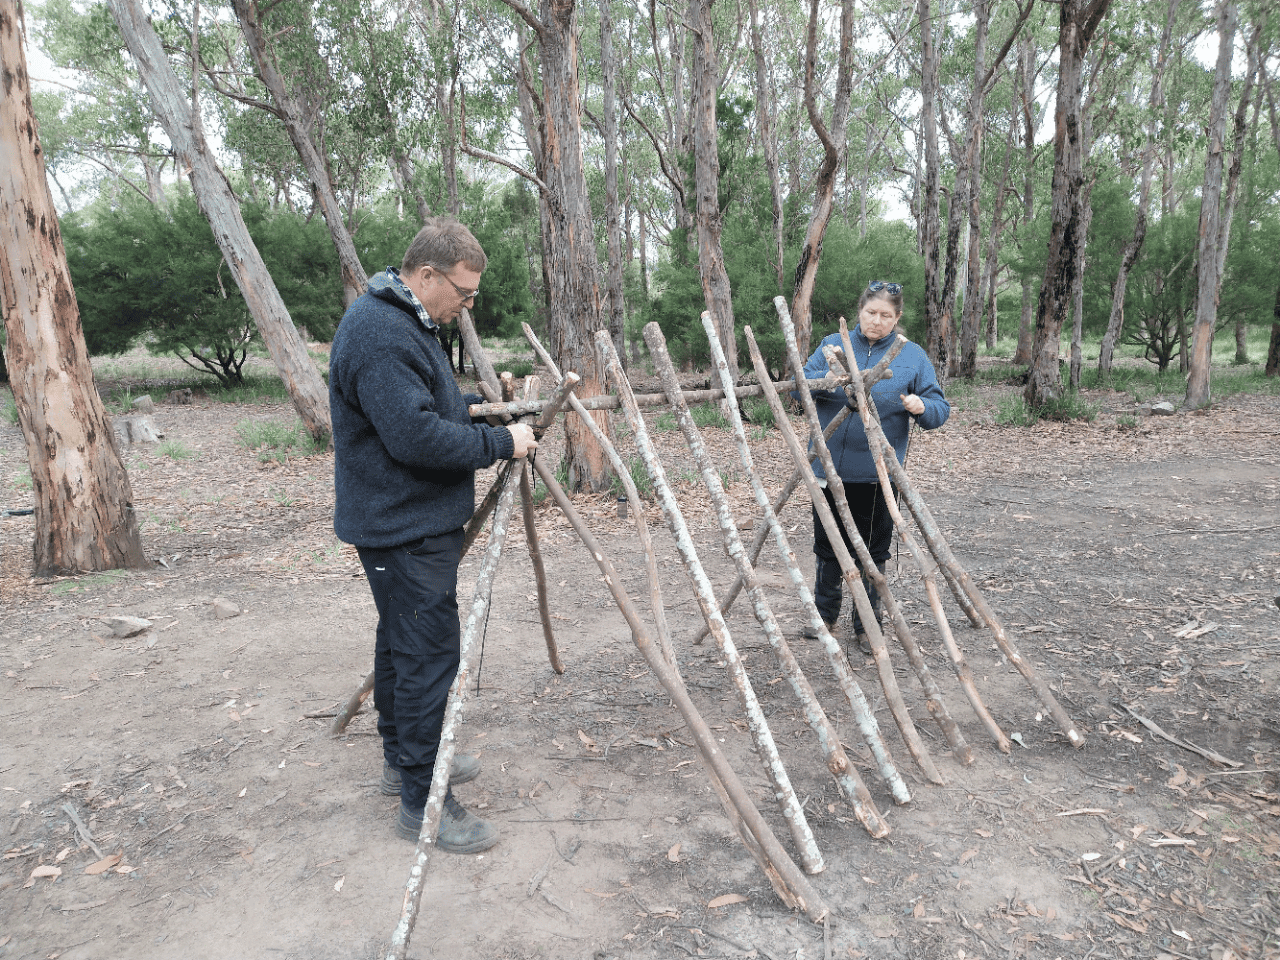 survival courses australia - group building a natural lean-to shelter